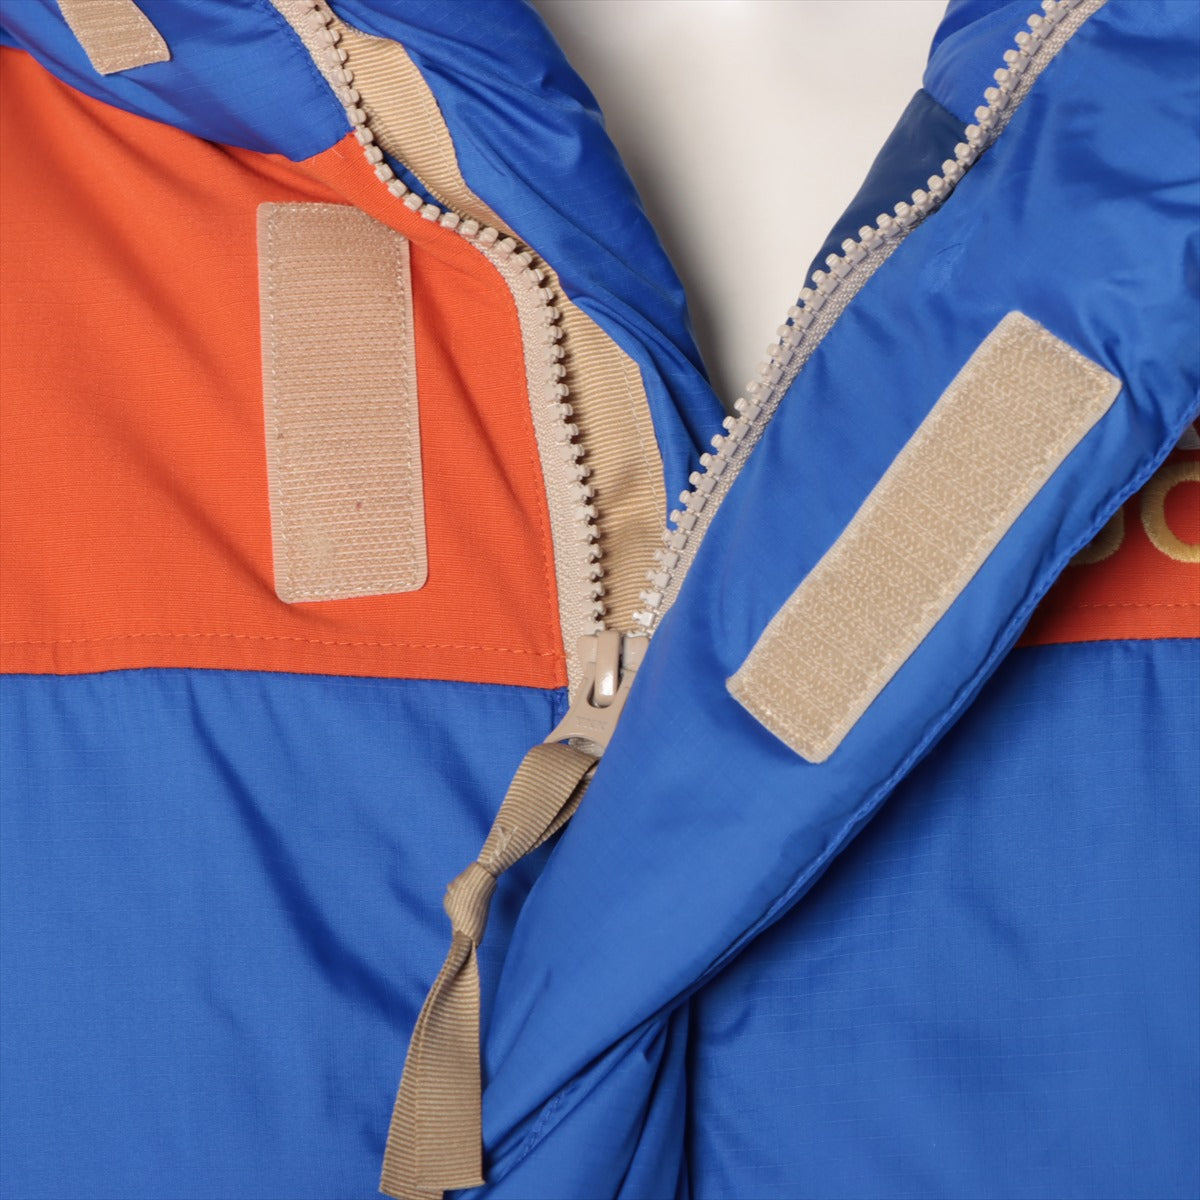 Gucci x North Face Polyester & Nylon Down jacket M Men's Blue x orange  663895